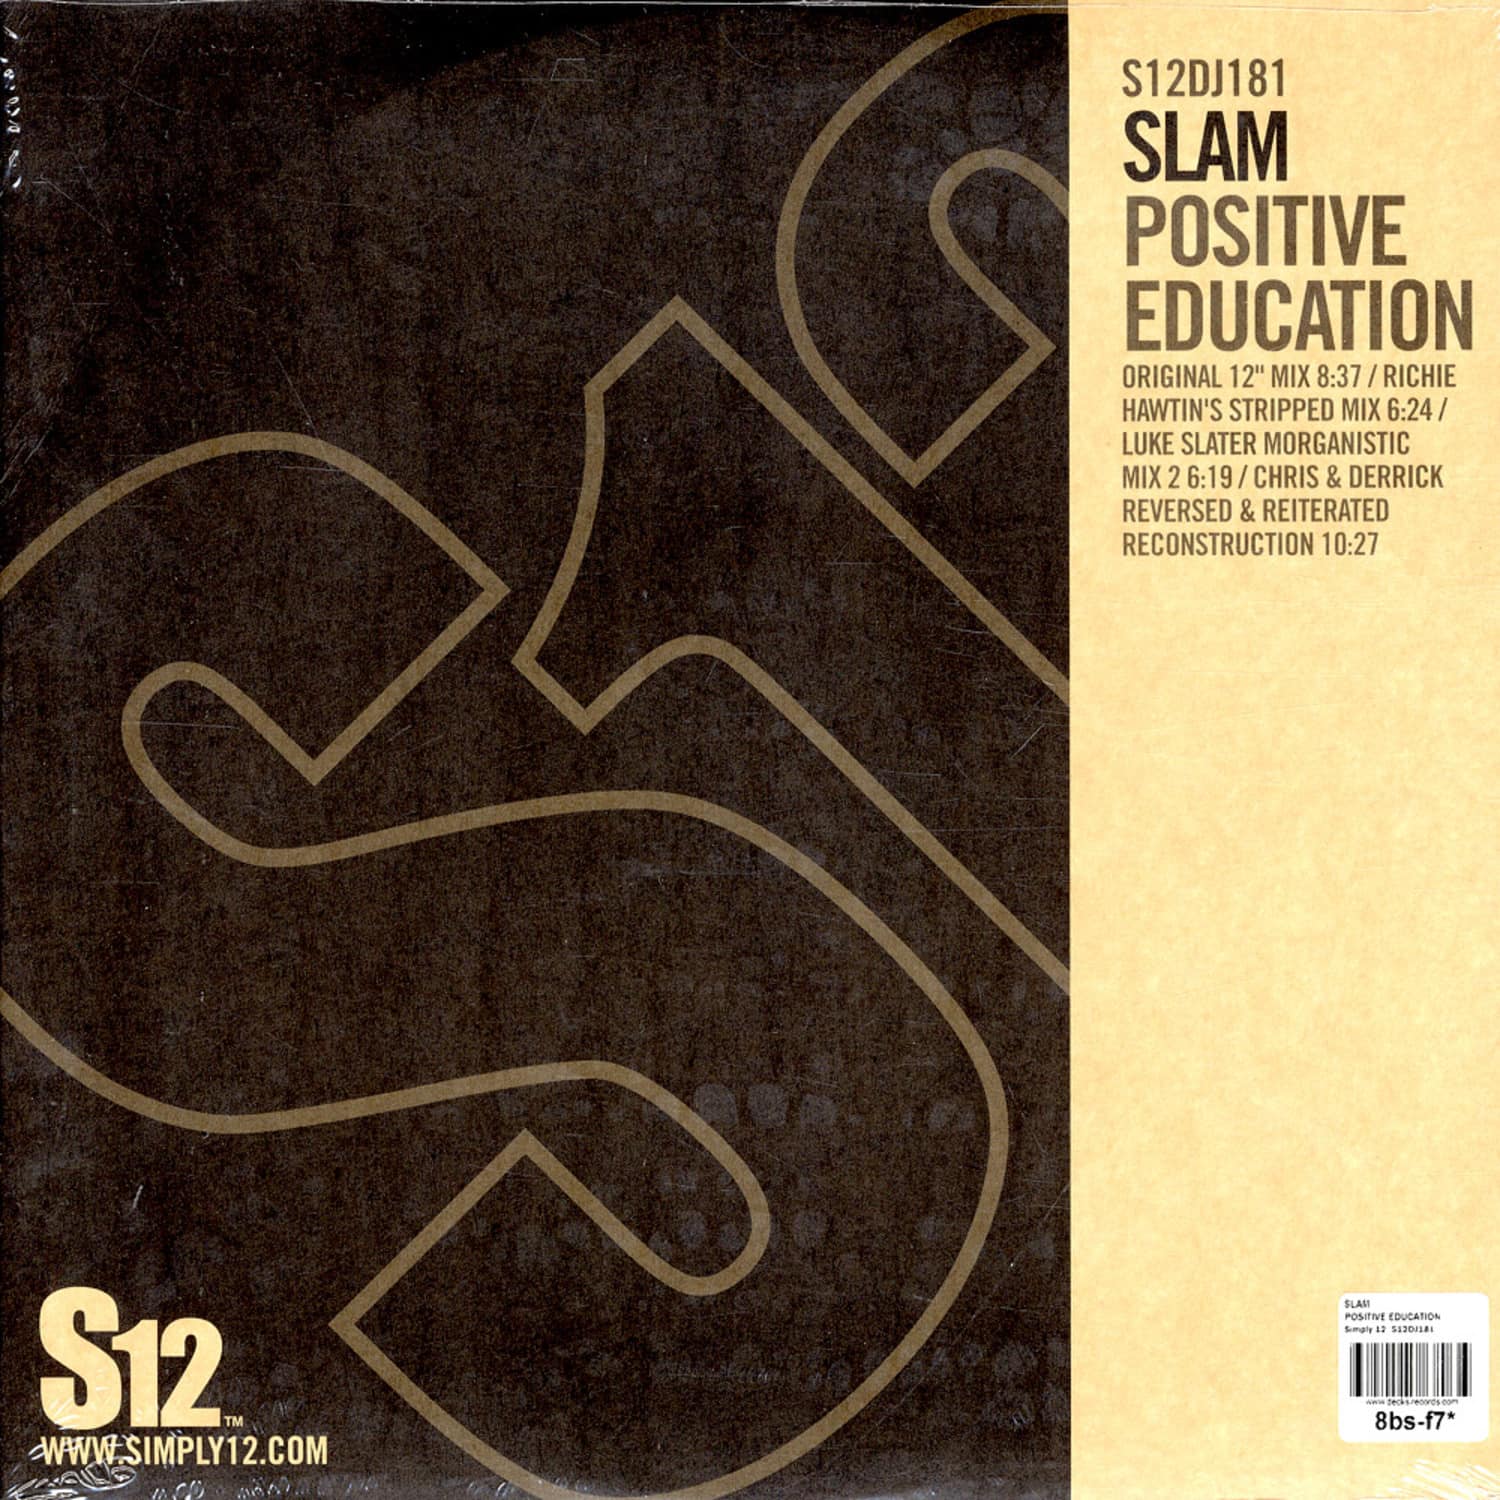 Slam - POSITIVE EDUCATION